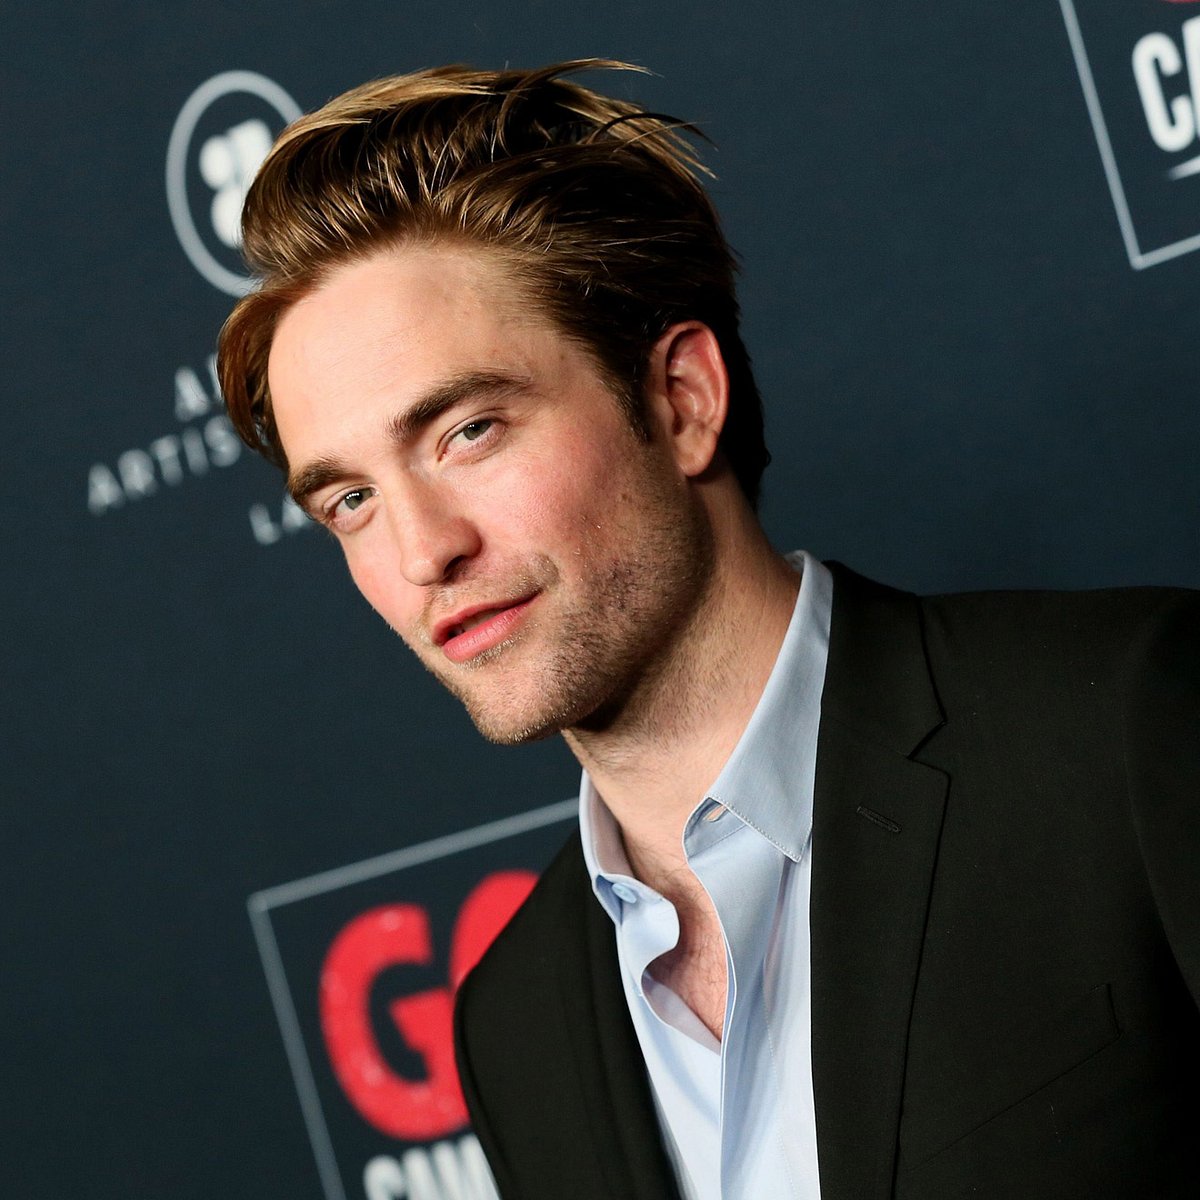 Robert Pattinson verrät: So war es am “Harry Potter”-Set